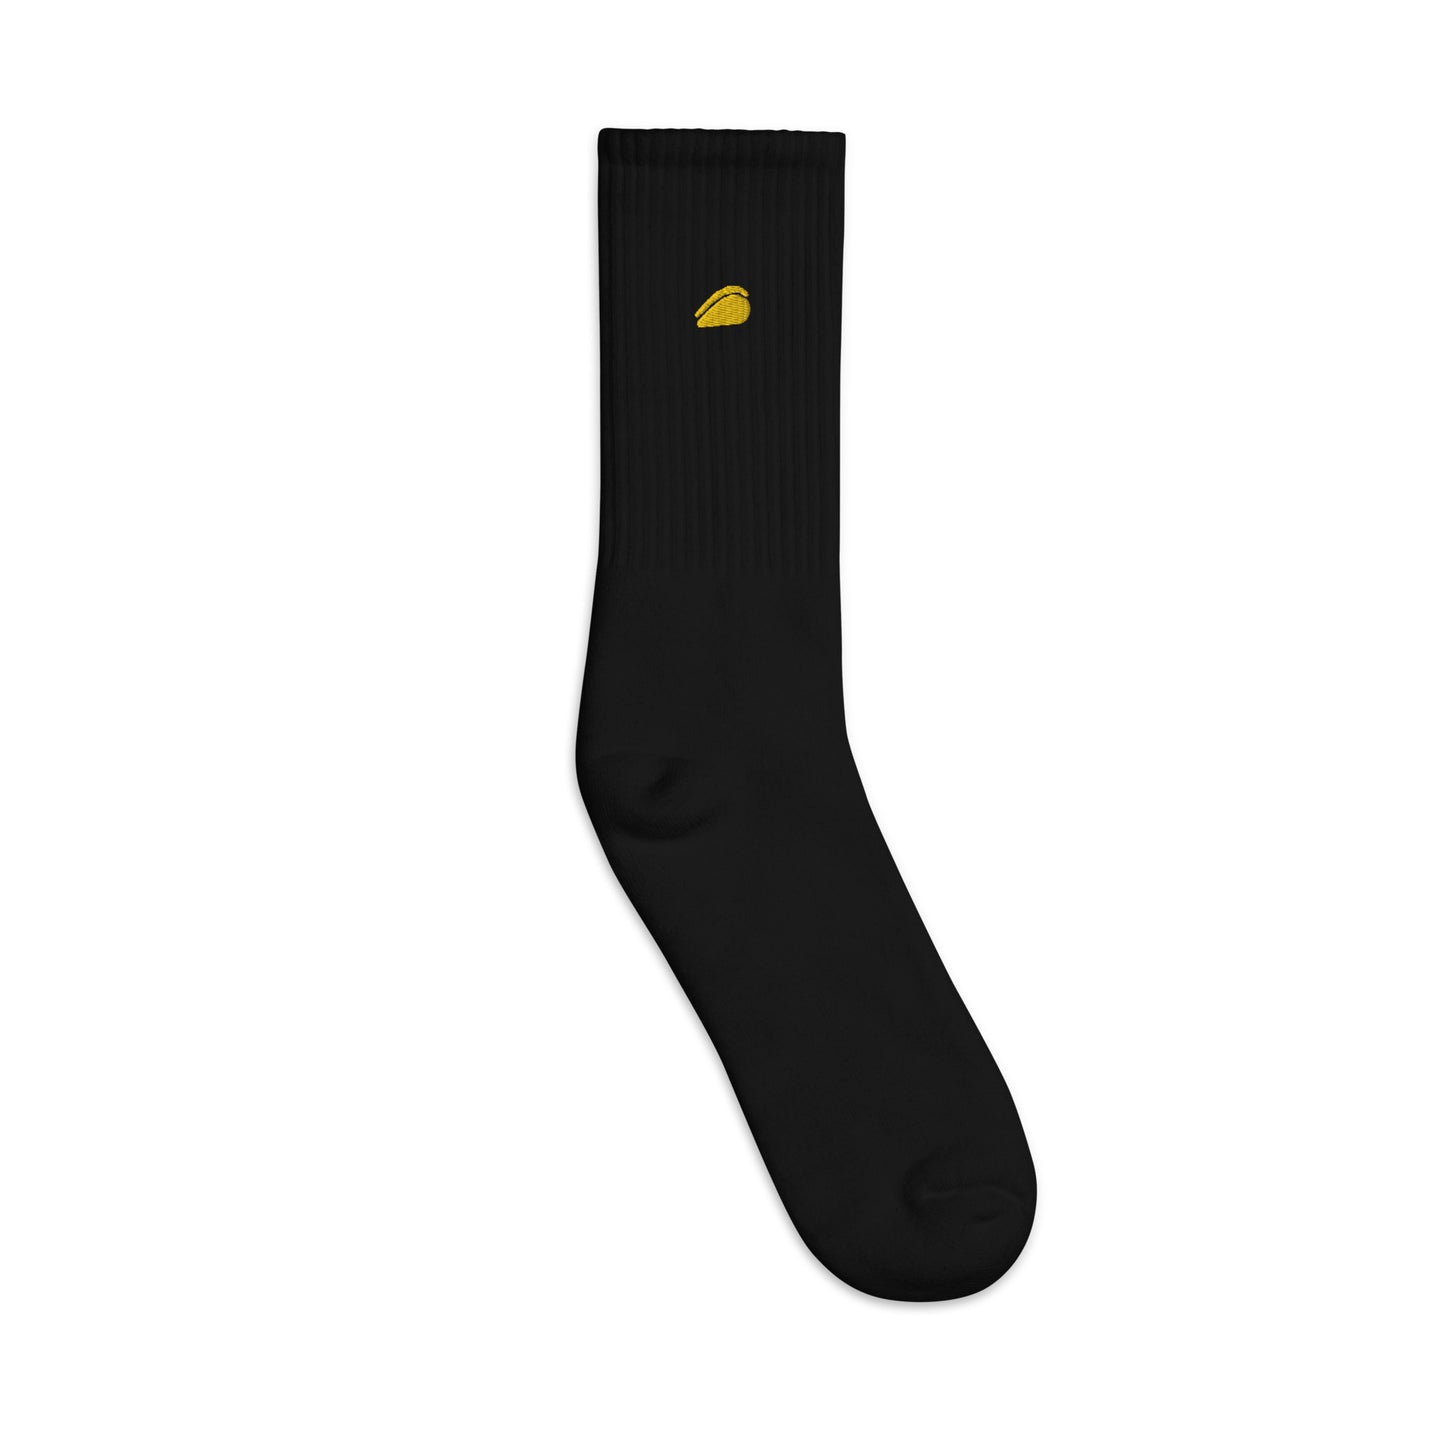 AppSumo - Embroidered socks